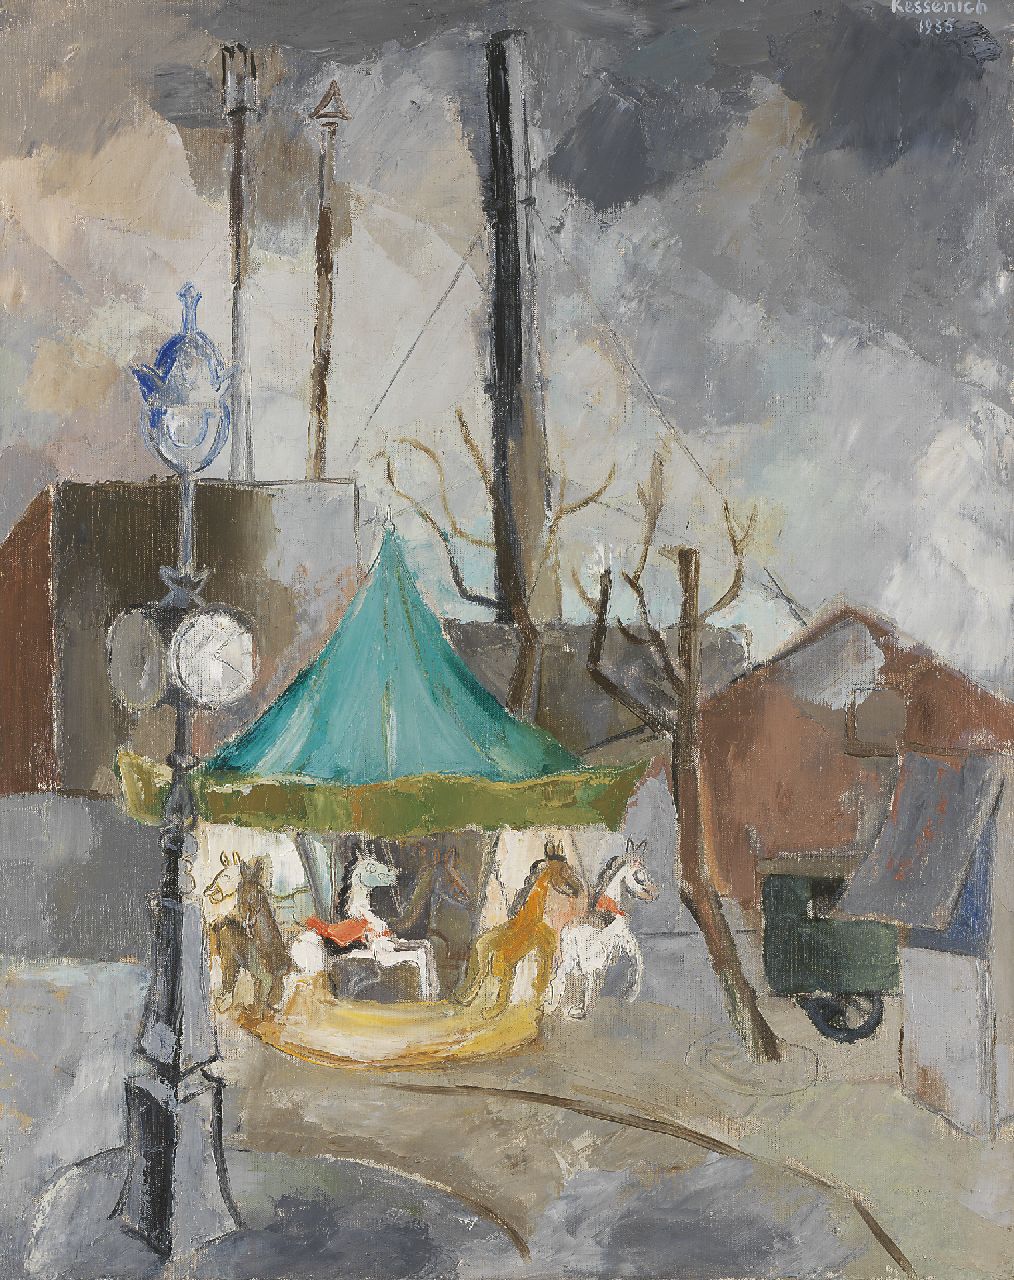 Judy Michiels van Kessenich | Carrousel in Parijs, olieverf op doek, 81,5 x 65,5 cm, gesigneerd r.b. en gedateerd 1935